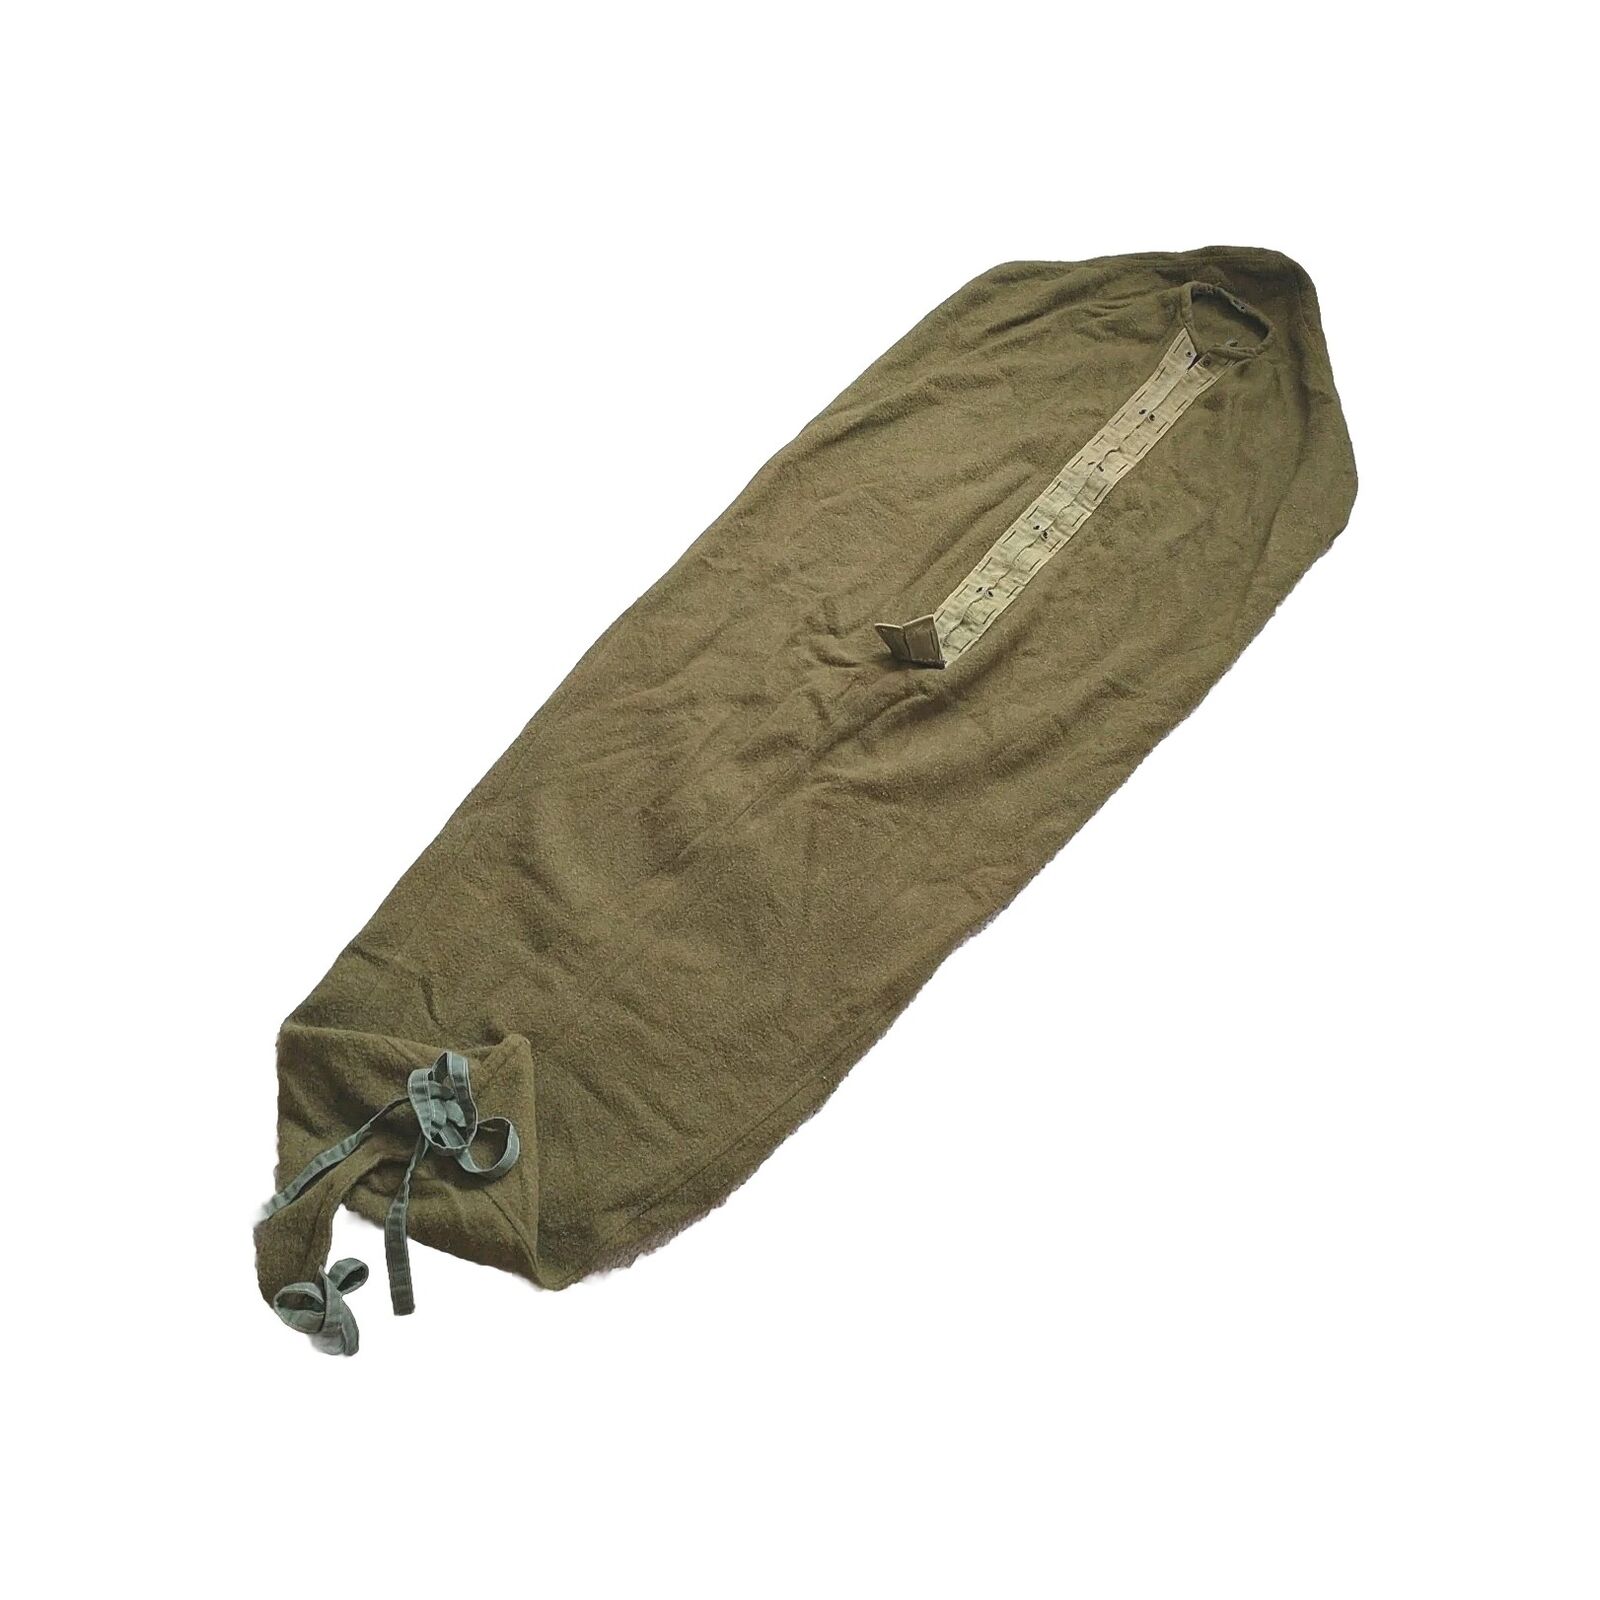 World War II US Army Wool Sleeping Bag Green Dated 1945 Mummy Military VTG